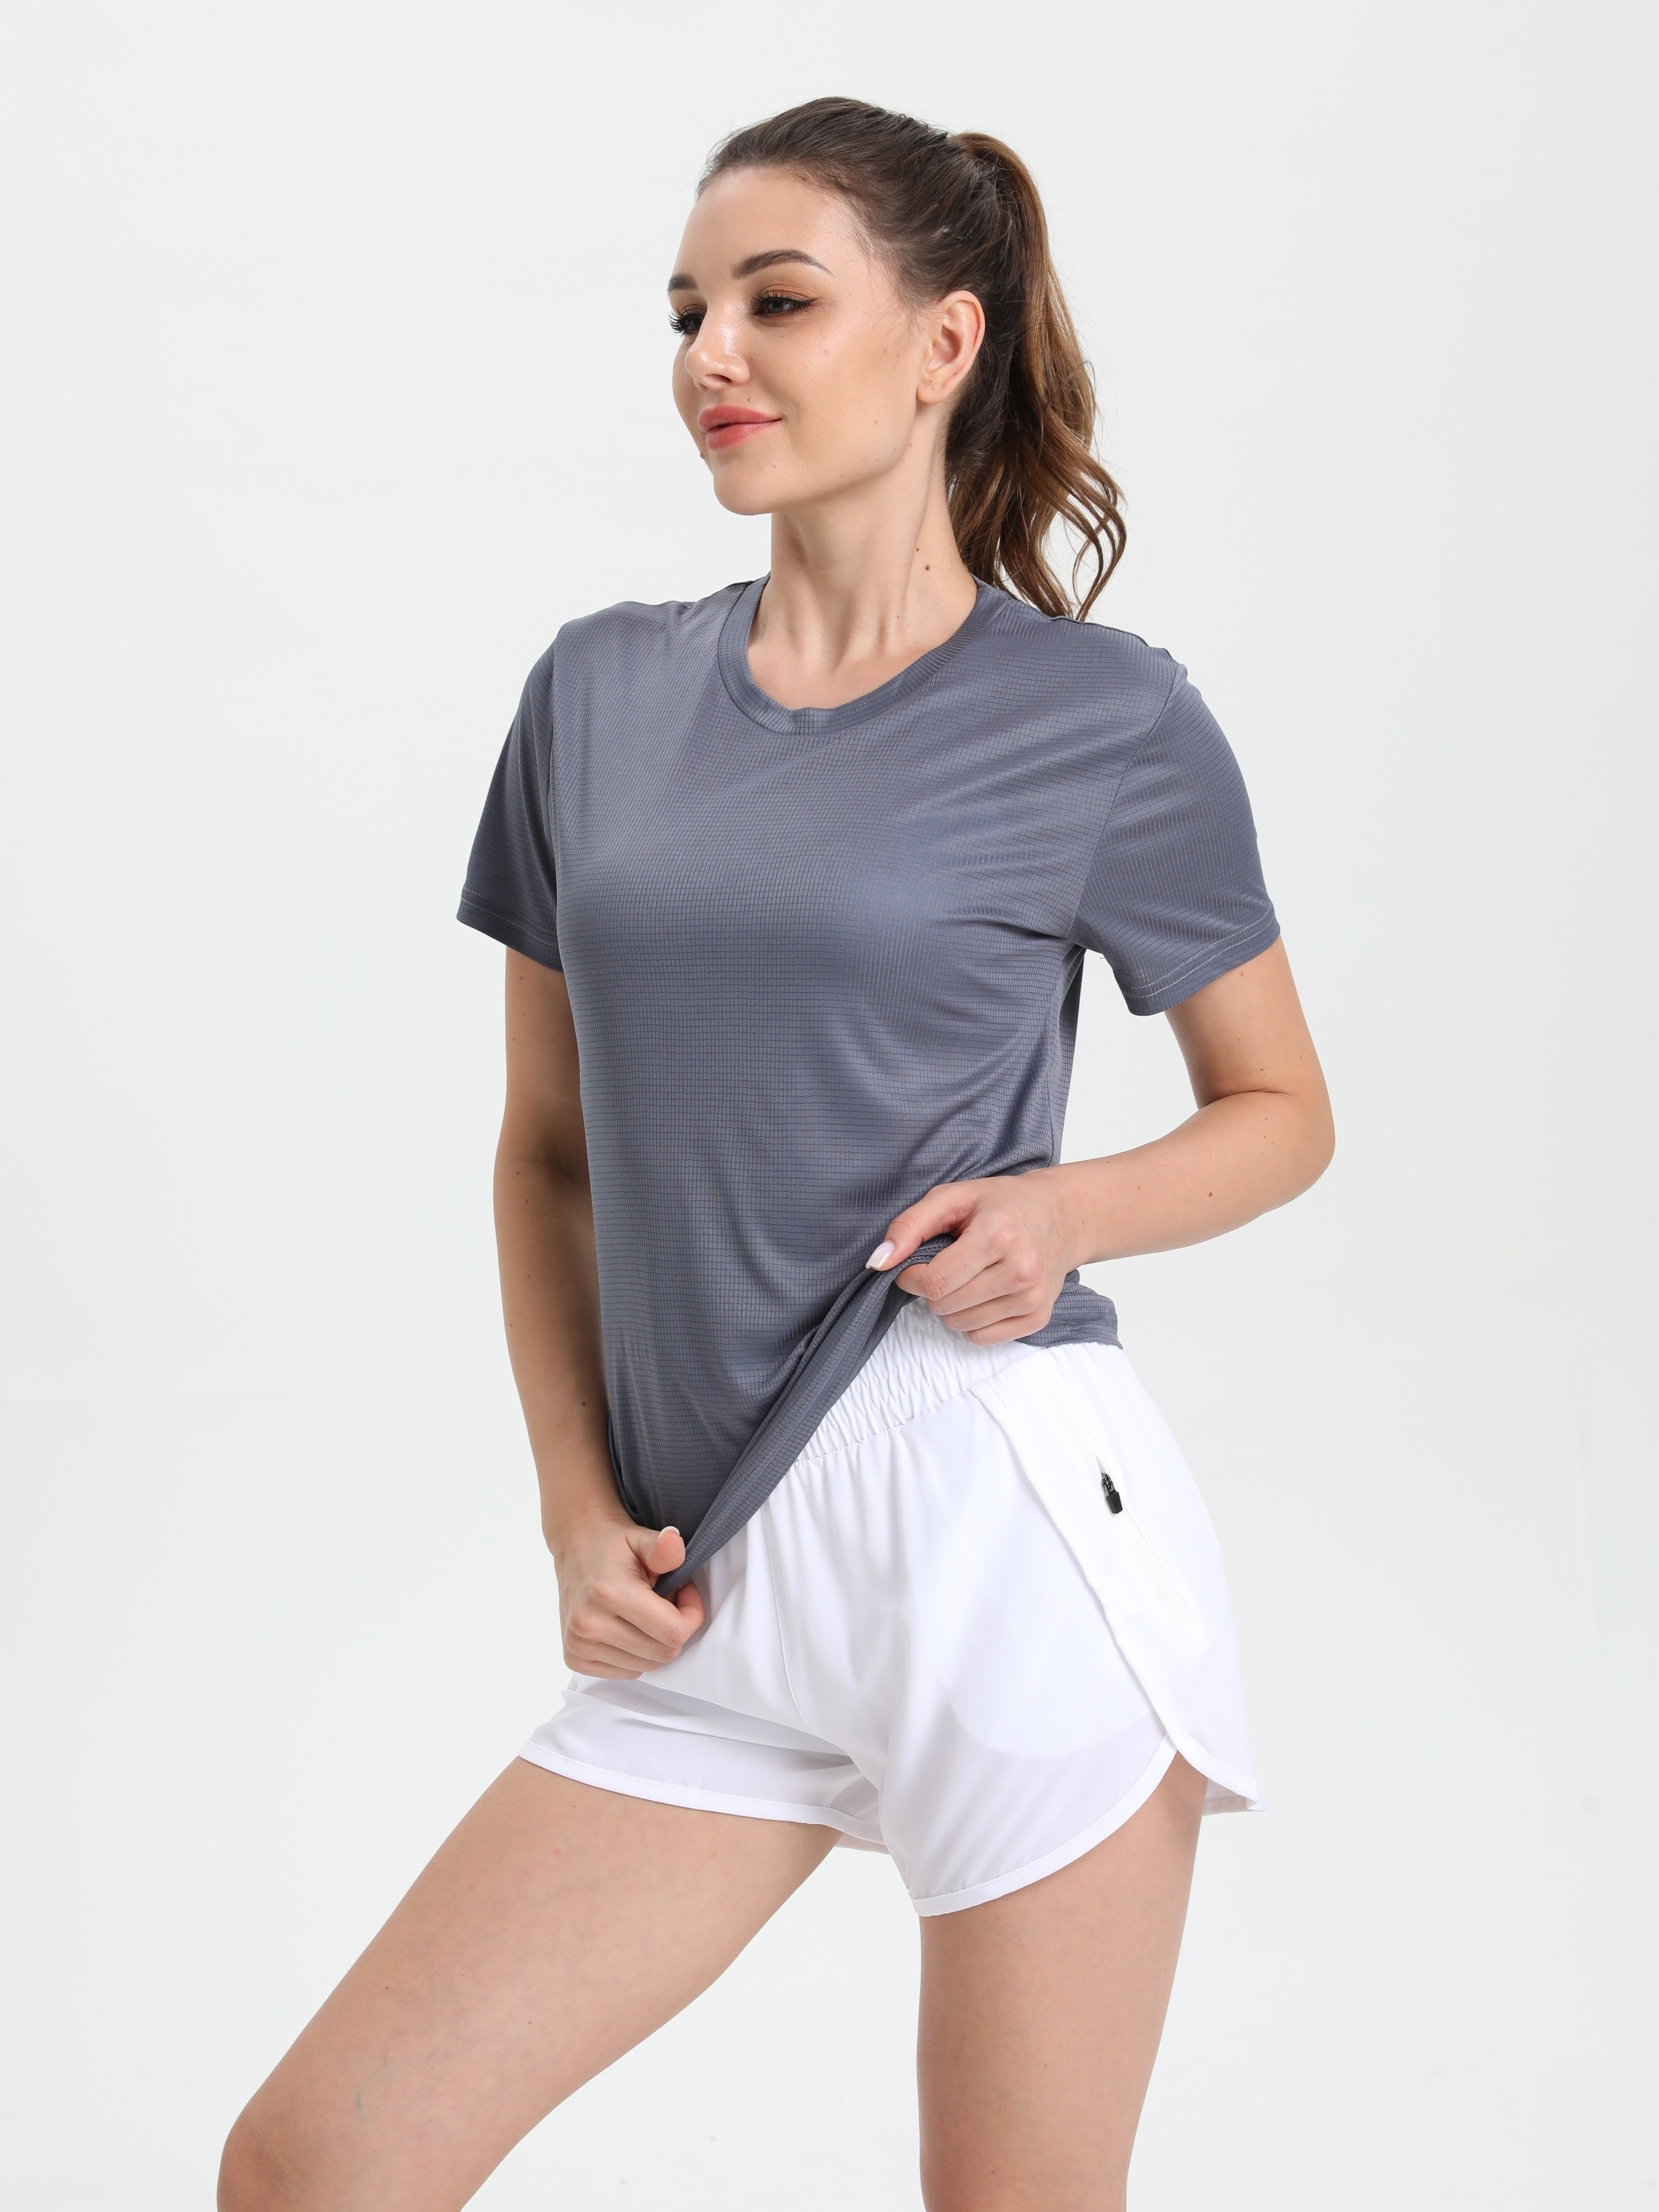 Women's Workout T-Shirt Quick Dry Short-Sleeve Exercise Shirt